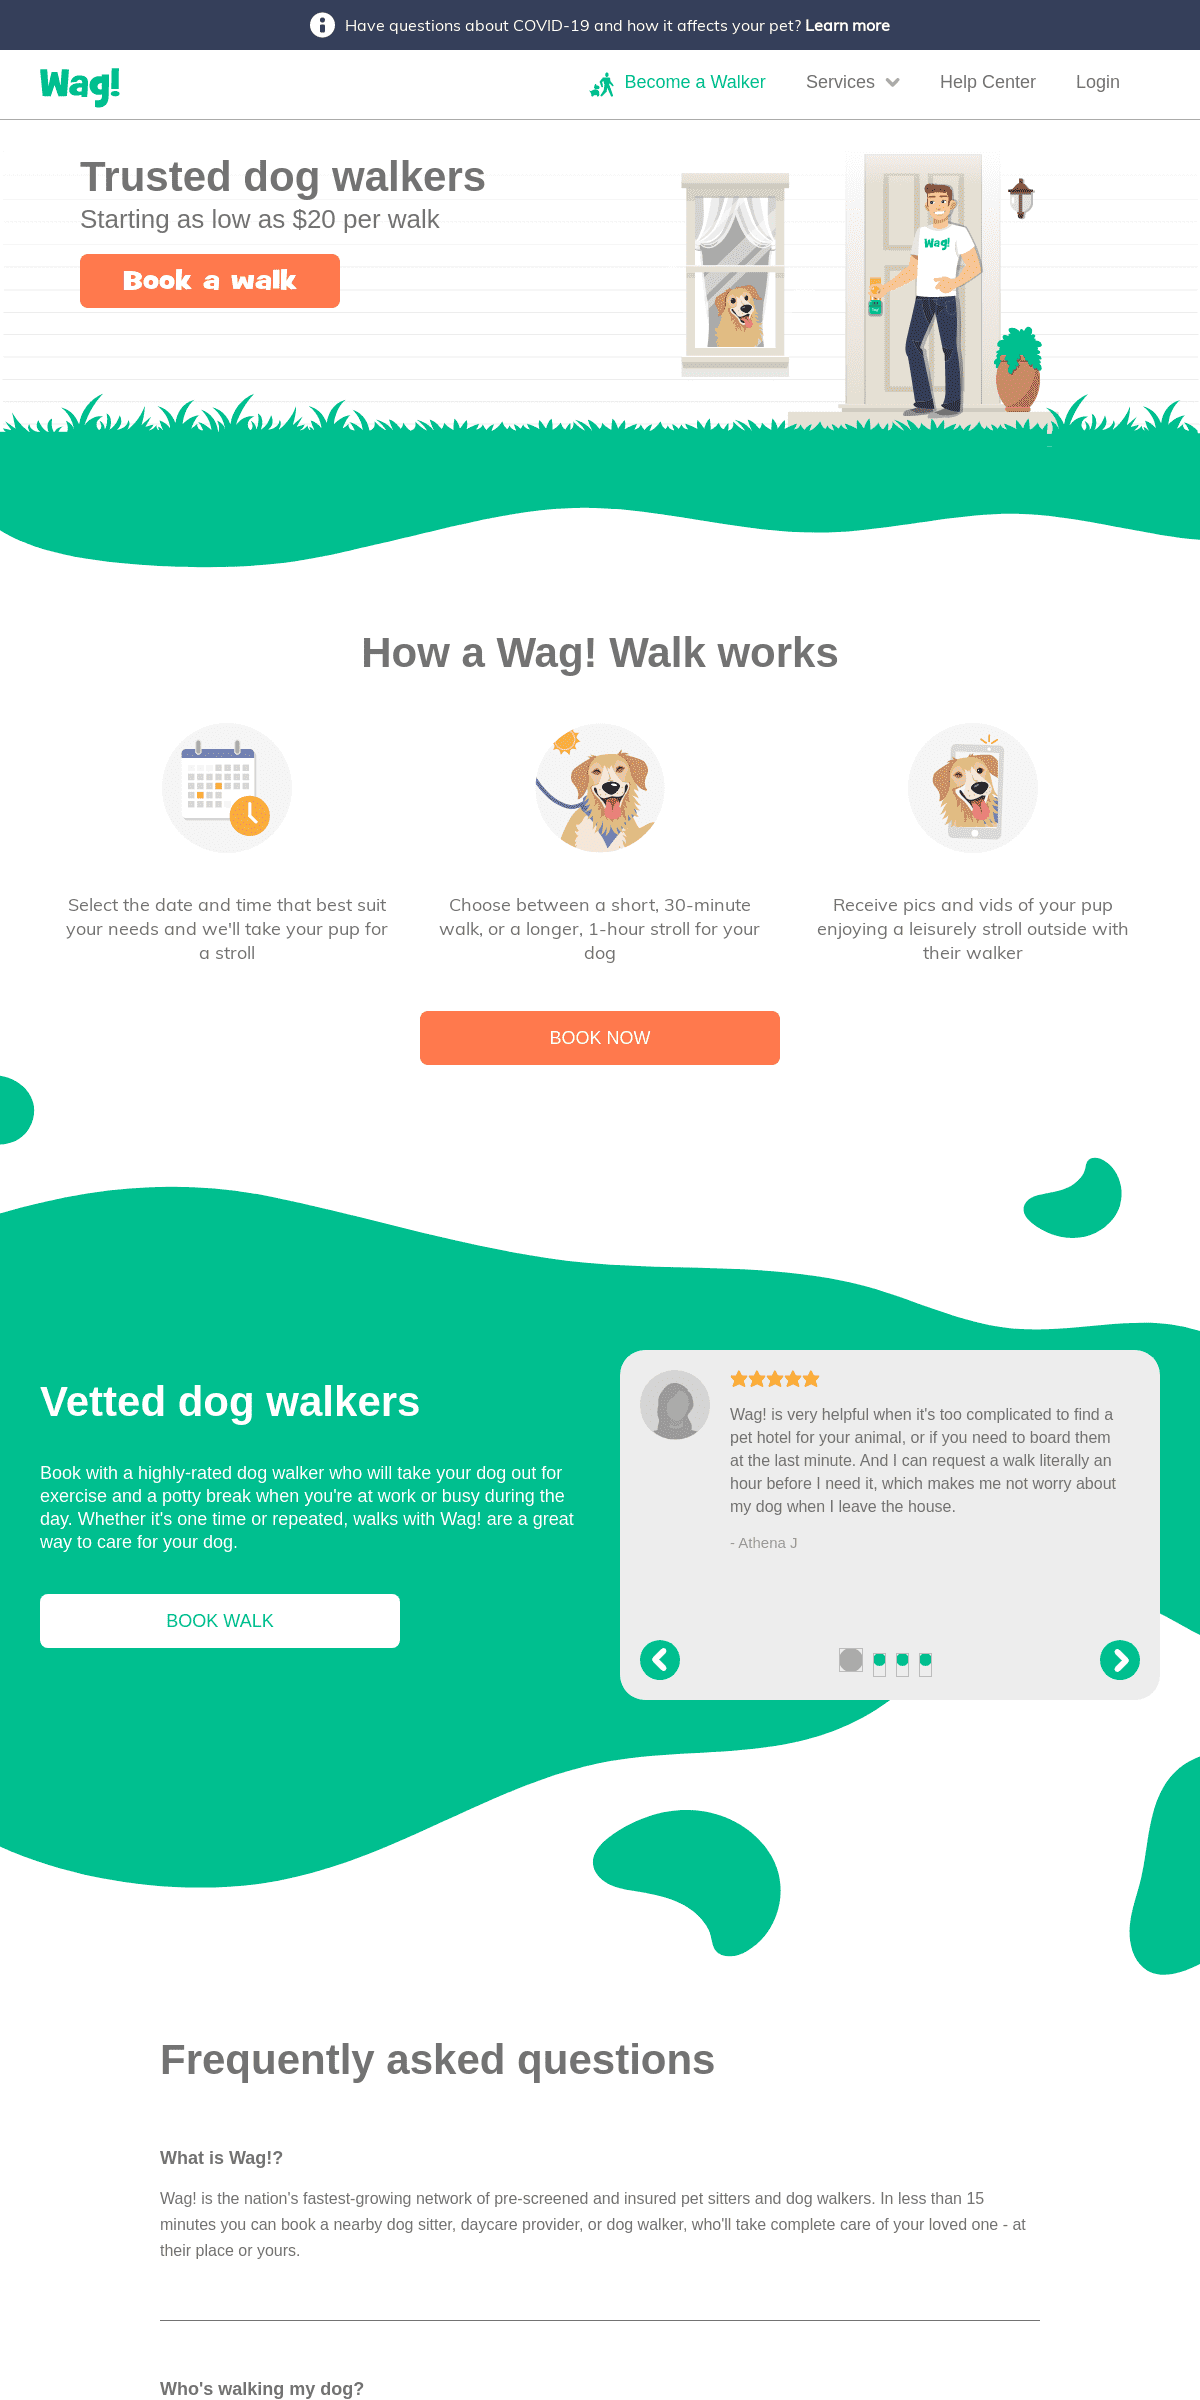 A complete backup of doggoes.com